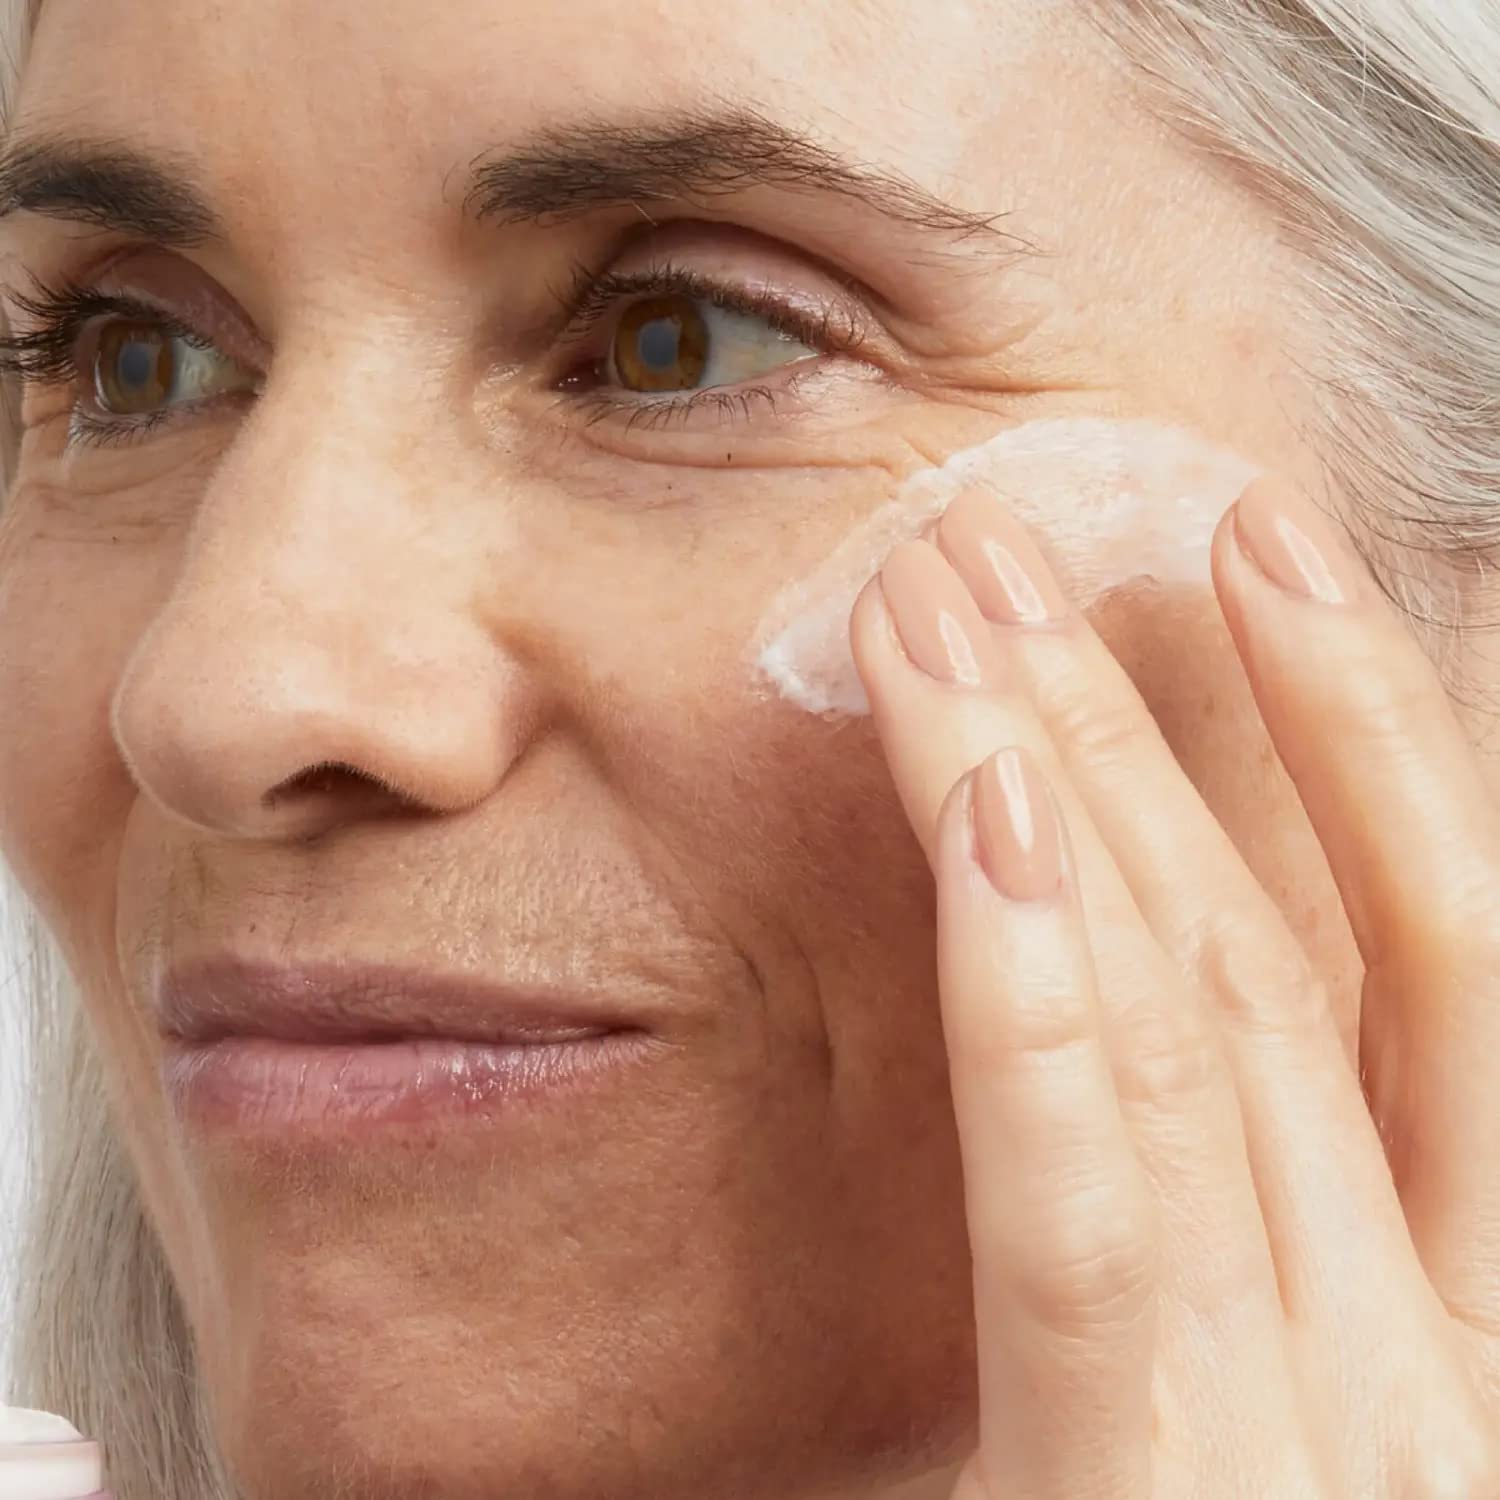 No7 Menopause Skincare Nourishing Overnight Cream - Hydrating Hyaluronic Night Cream for Dry, Sensitive Menopausal Skin - Skin Firming Lipids, Ceramides + Soy Isoflavones (50 ml)